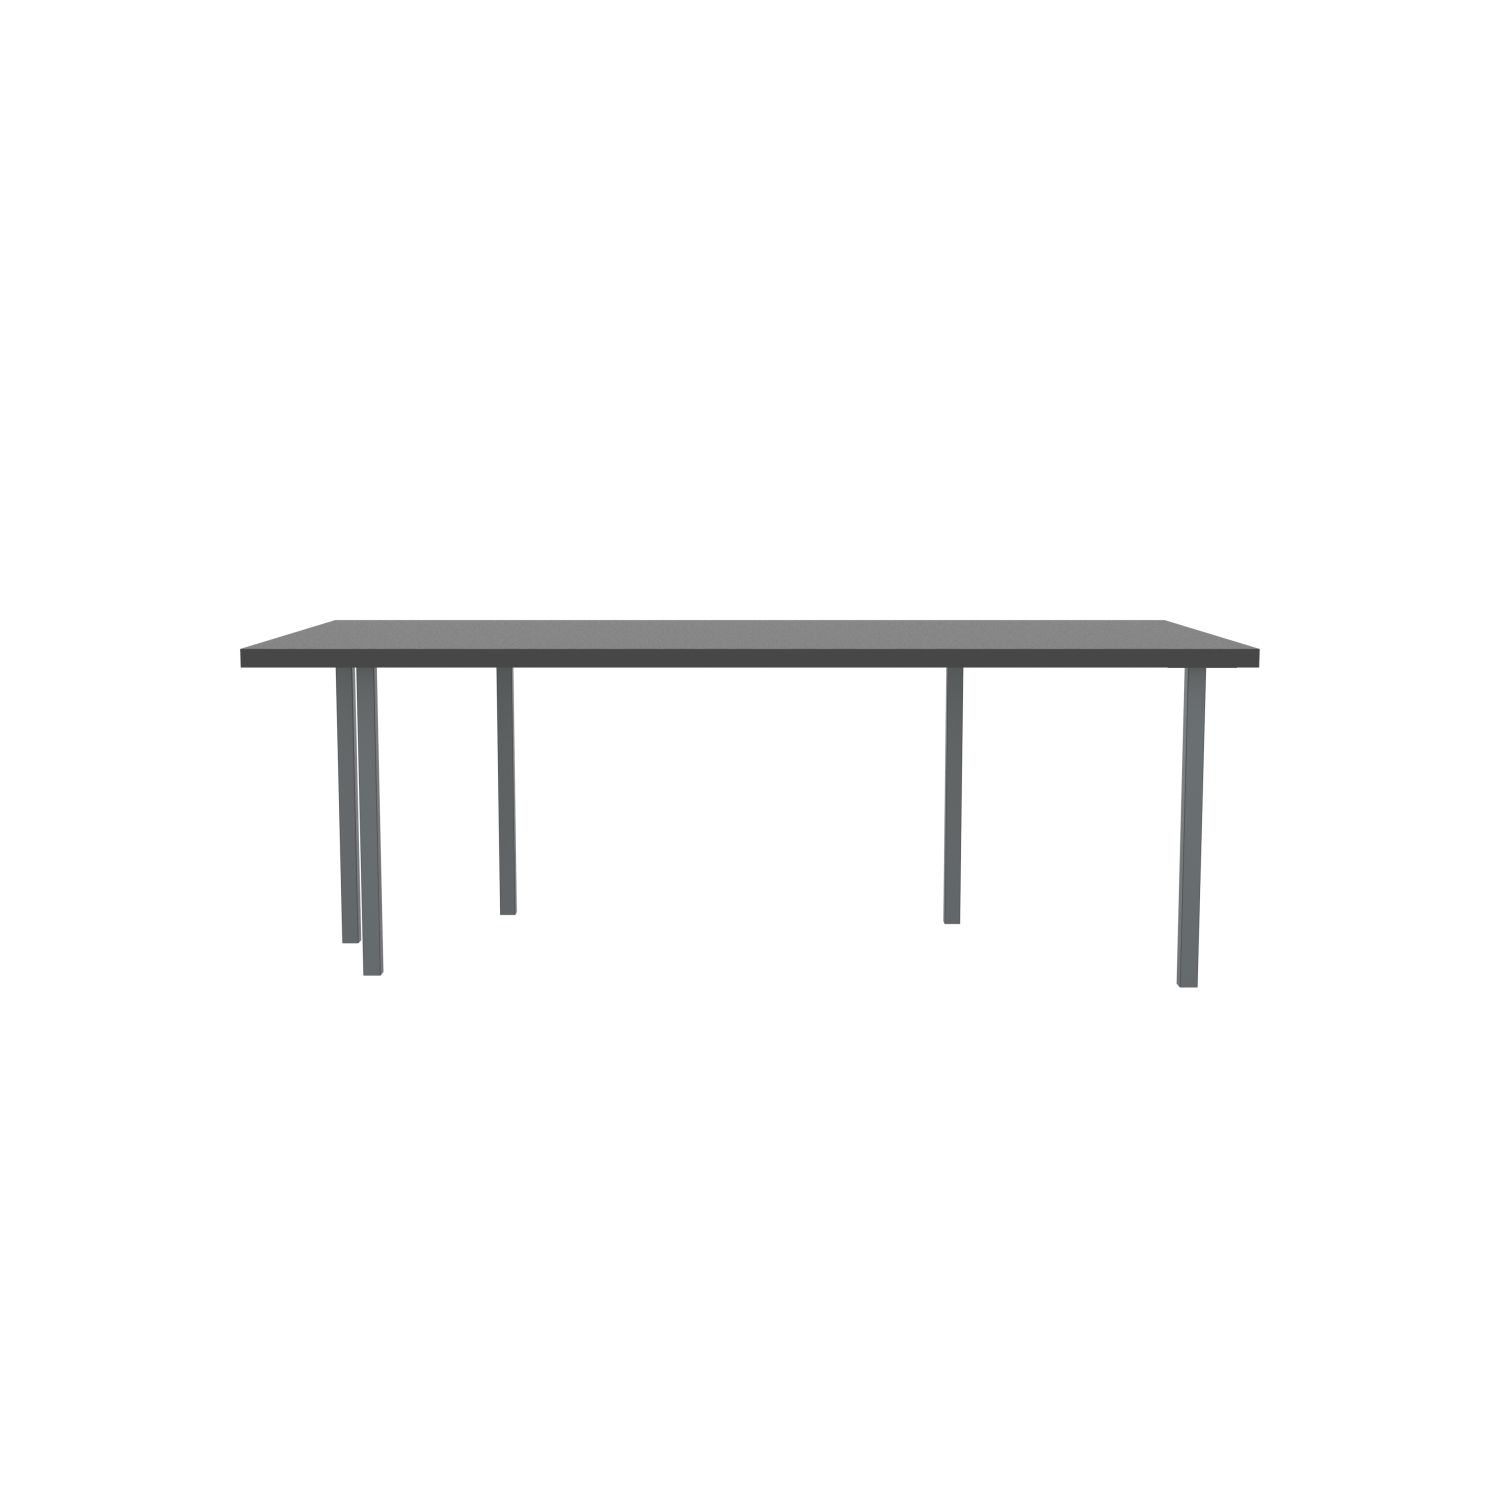 lensvelt bbrand table five fixed heigt 103x218 hpl black 50 mm price level 1 dark grey ral7011